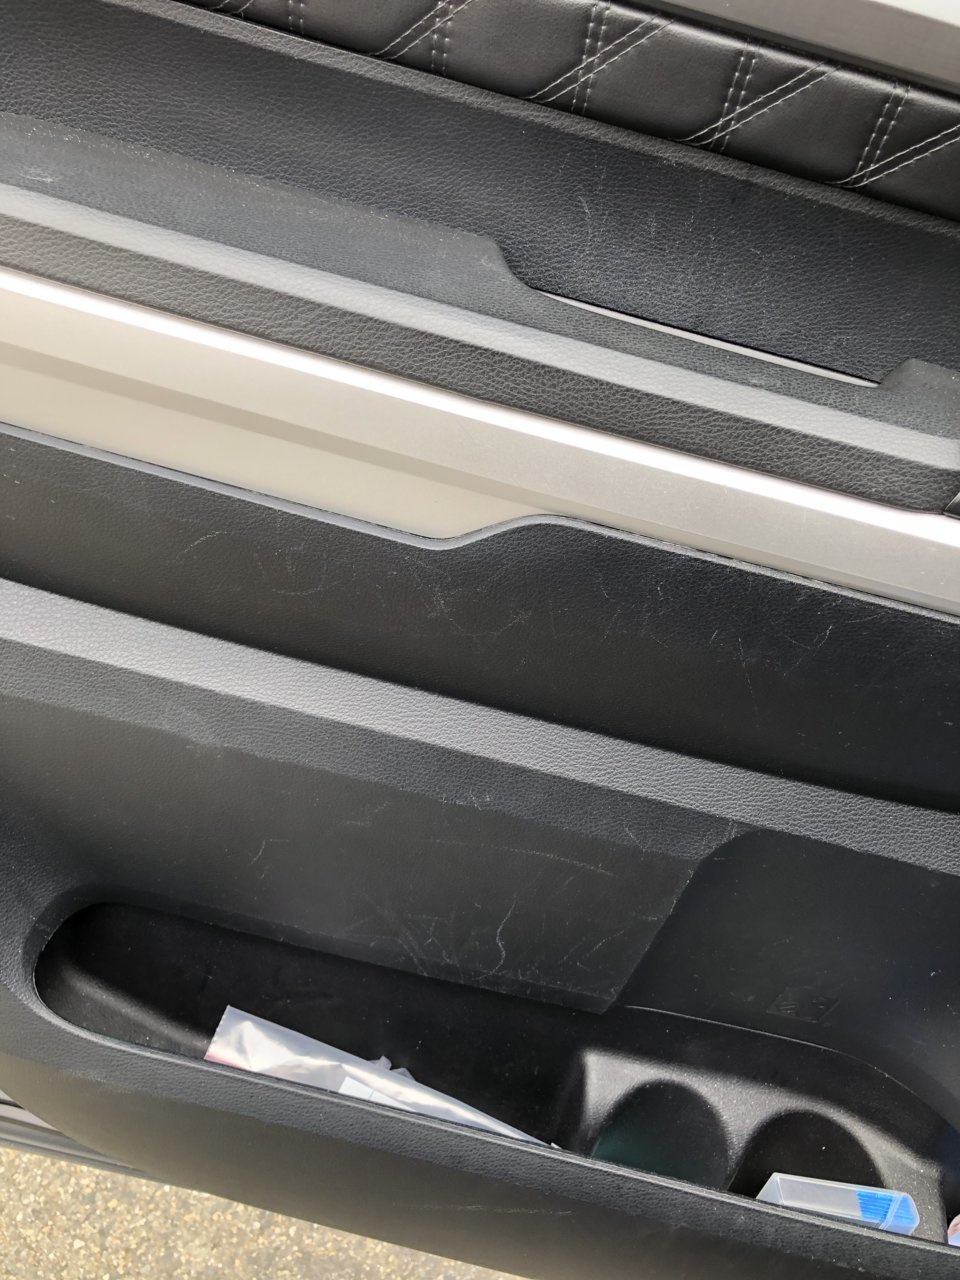 SHINE ARMOR Plastic Restorer UV Protection & Car Interior Cleaner -  Restores Vinyl Trim Rubber Polypropylene and More, Vehicle Detailing &  Restoration - Yahoo Shopping